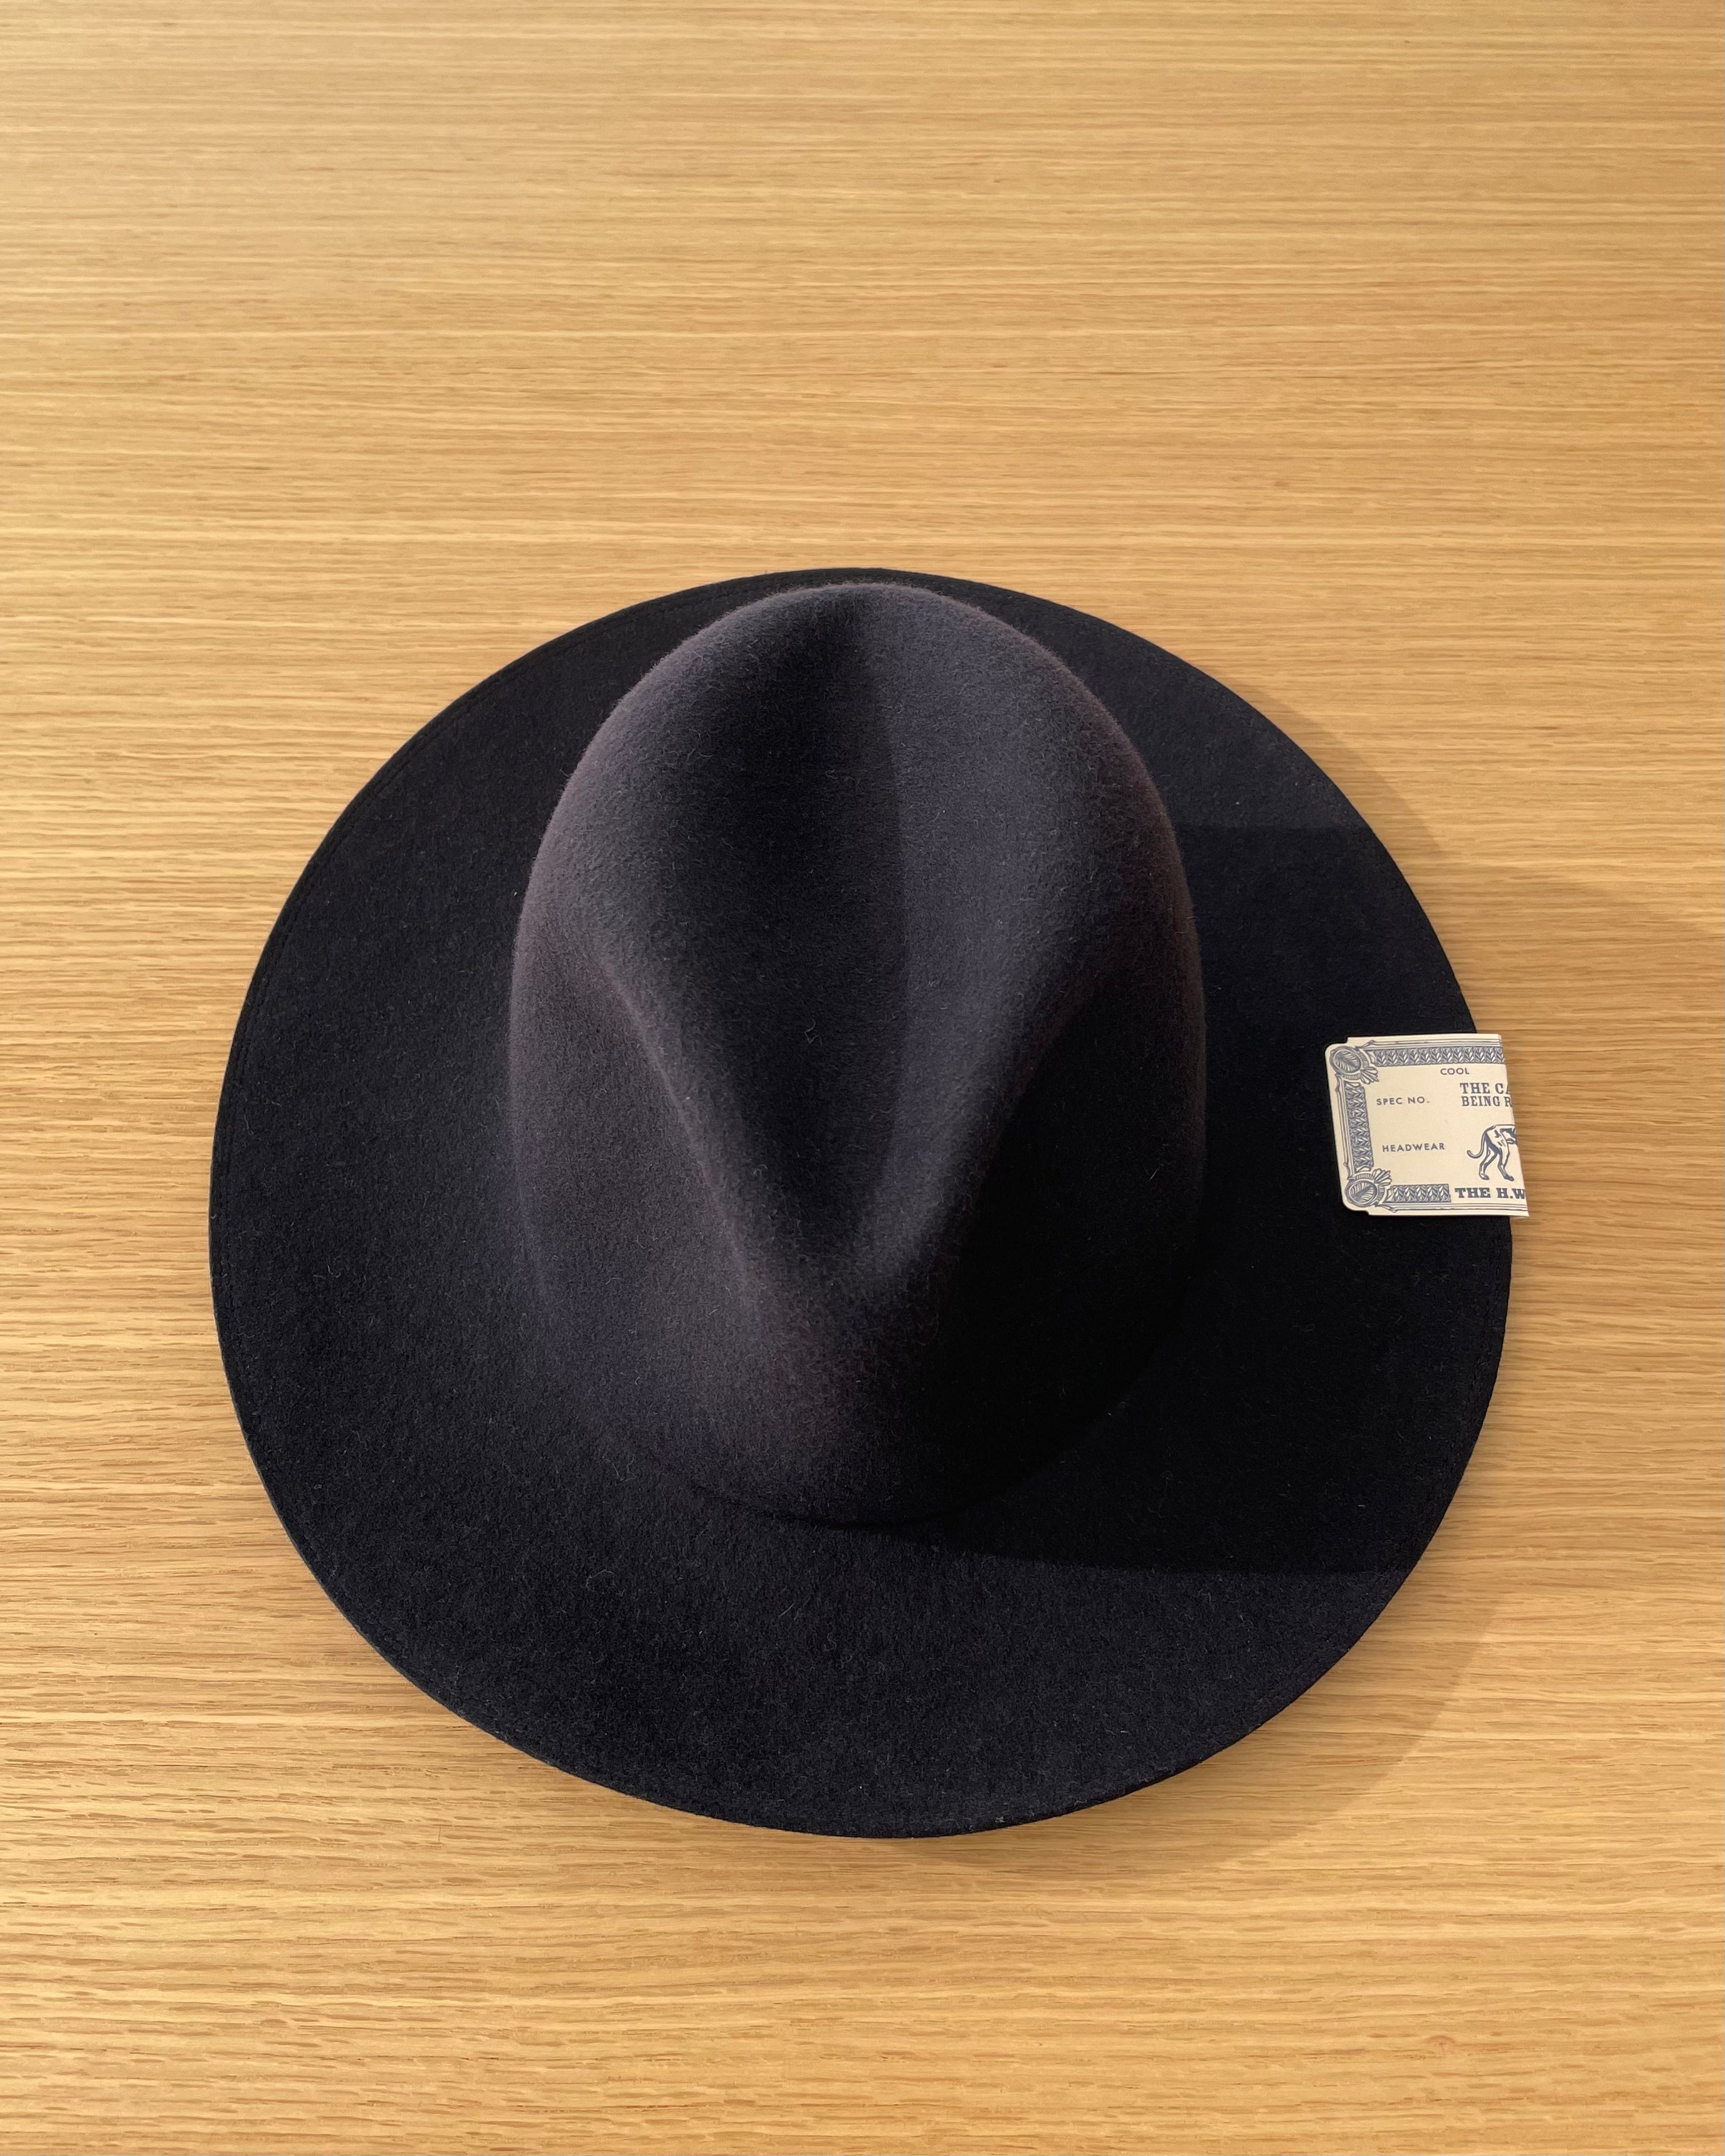 Travelers Hat in Navy Merino Wool Felt